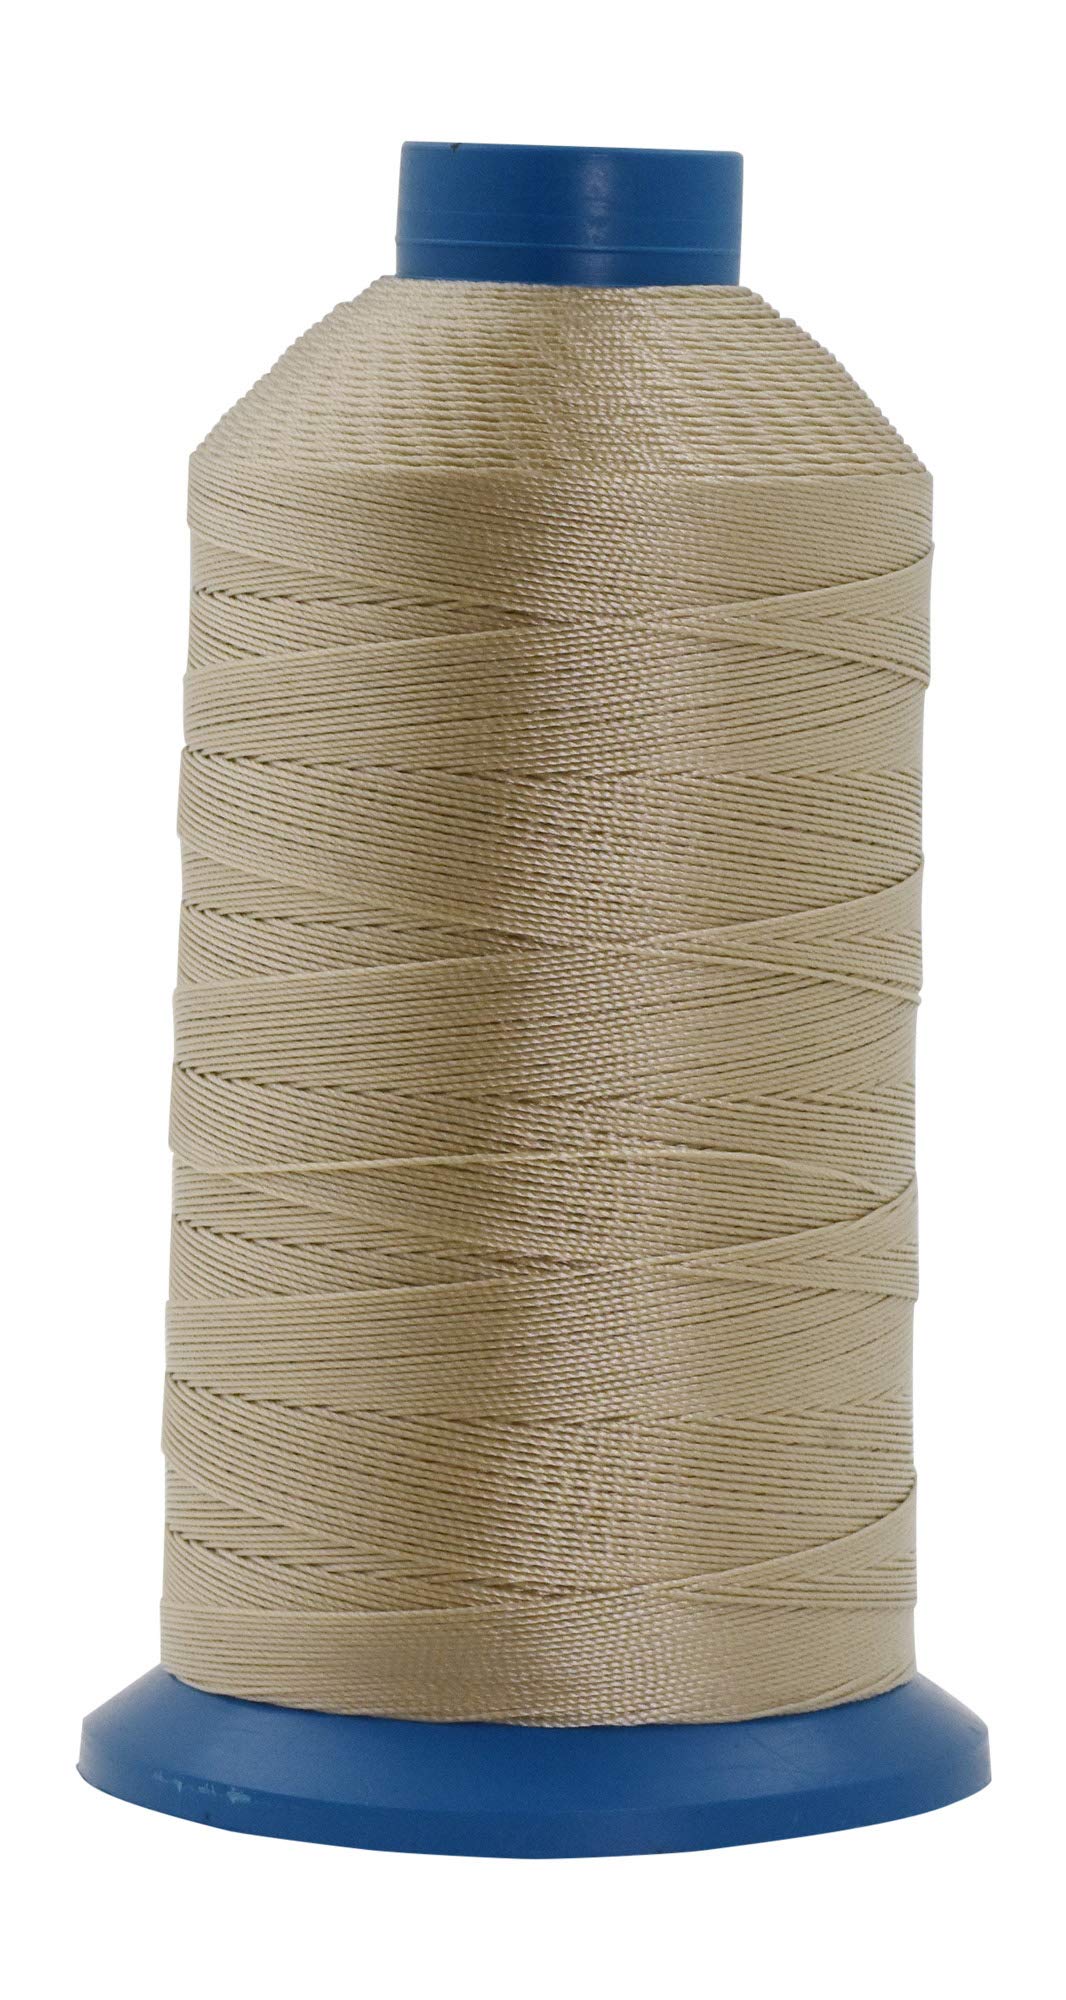 Mandala Crafts Tex 135 Bonded Nylon Thread for Sewing - 1250 YDs